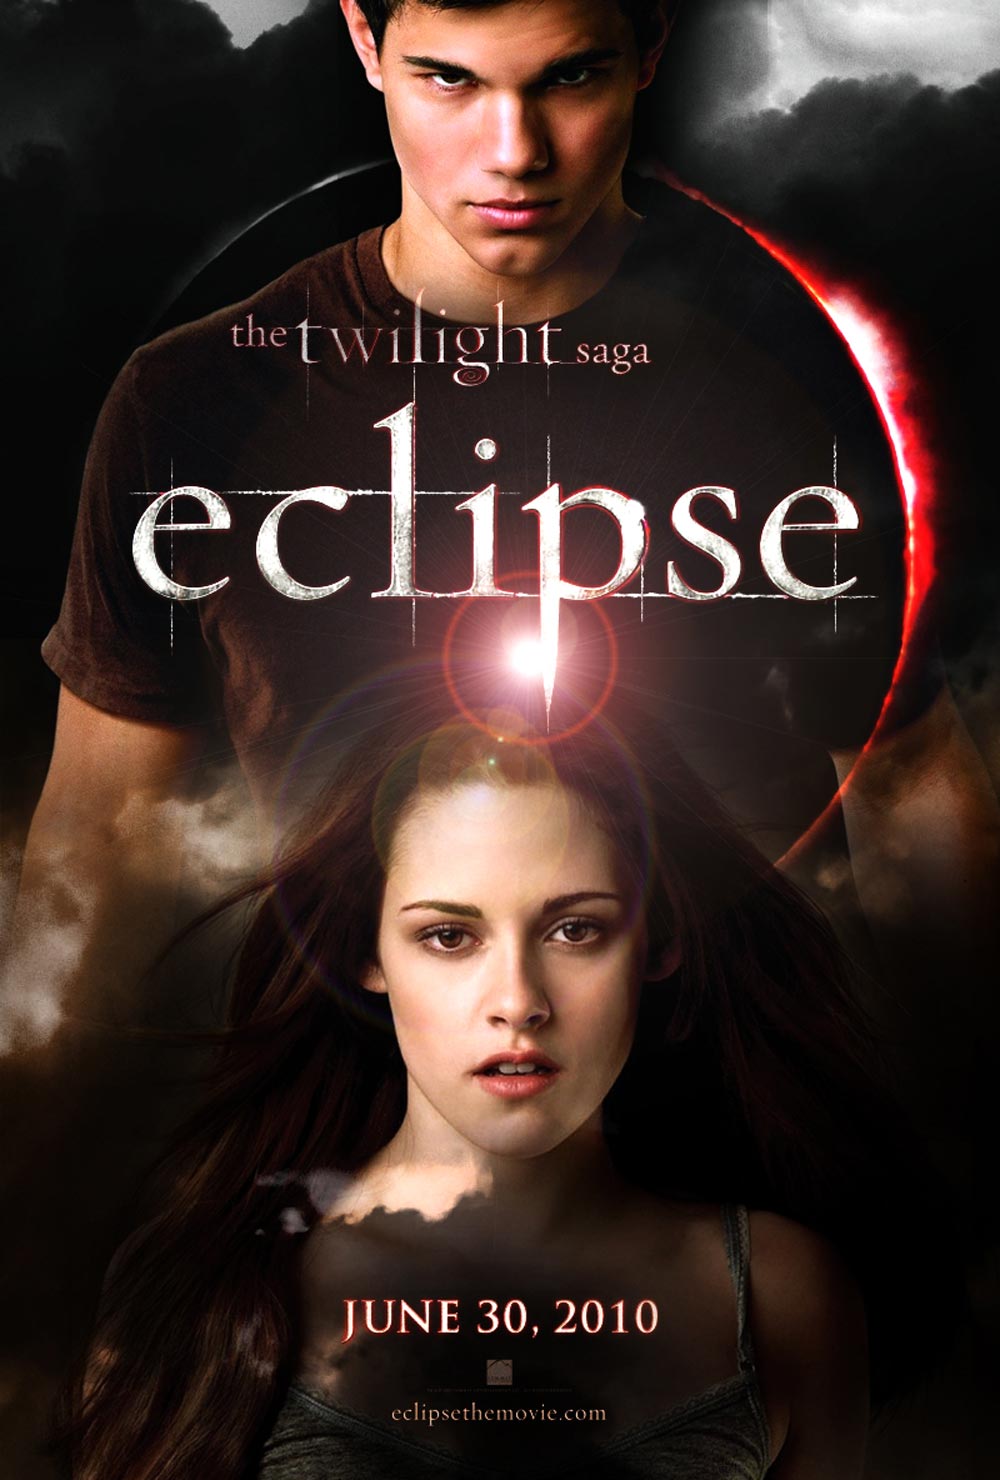 Roger Qbert Reviews “The Twilight Saga: Eclipse” | Review St. Louis